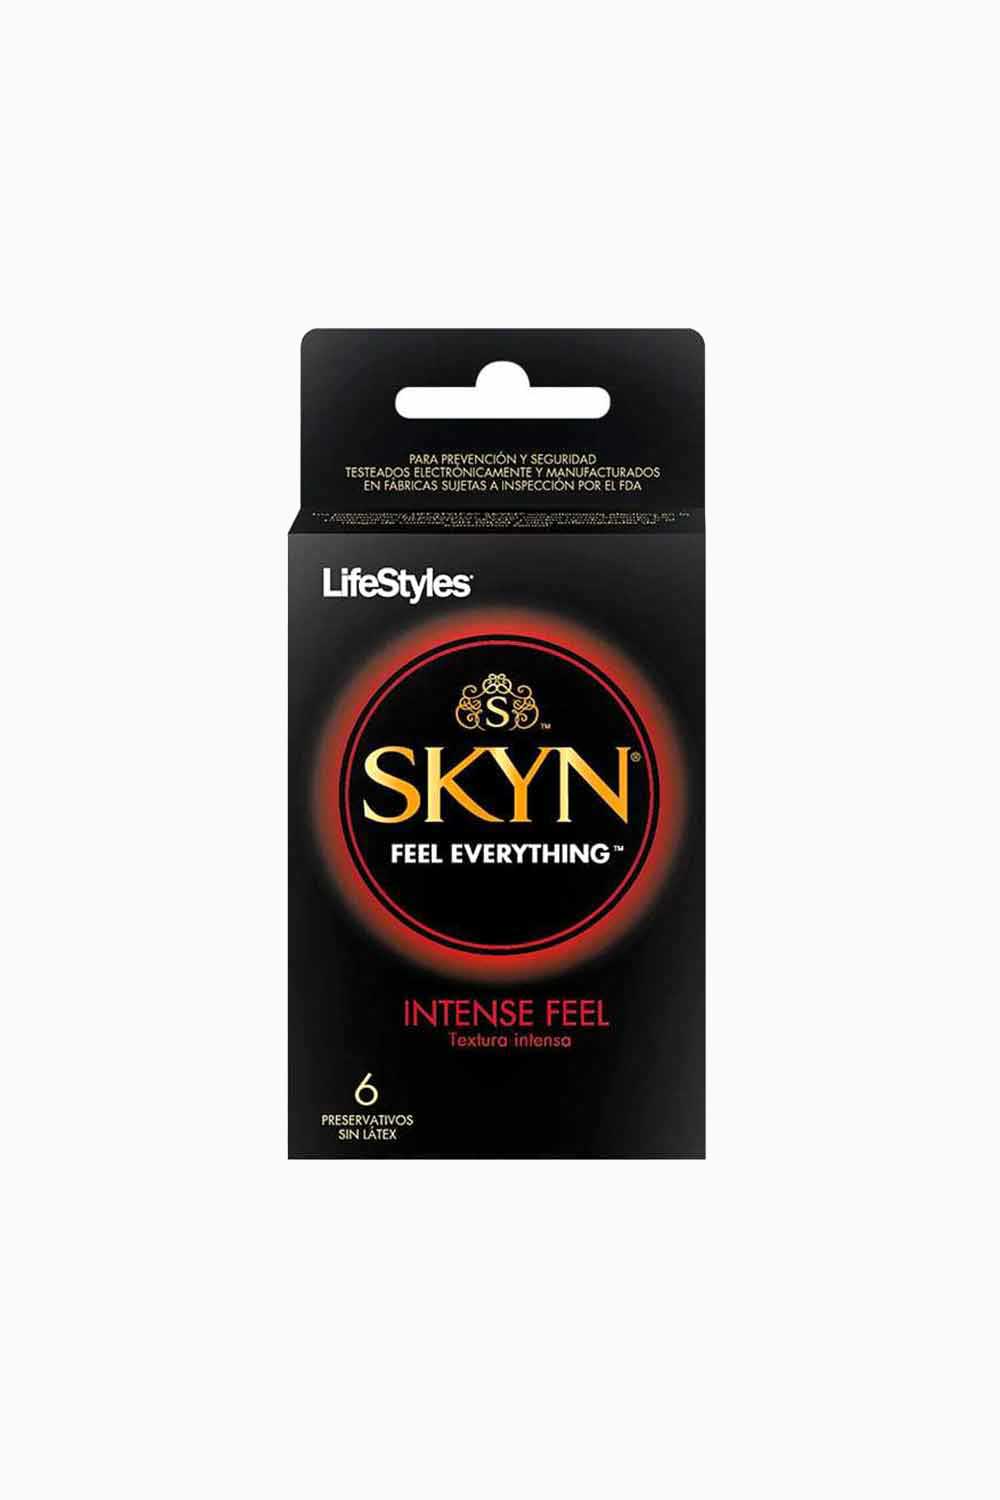 SKYN INTENSE FEEL | Condones Sin Latex con Textura Lifestyles x6